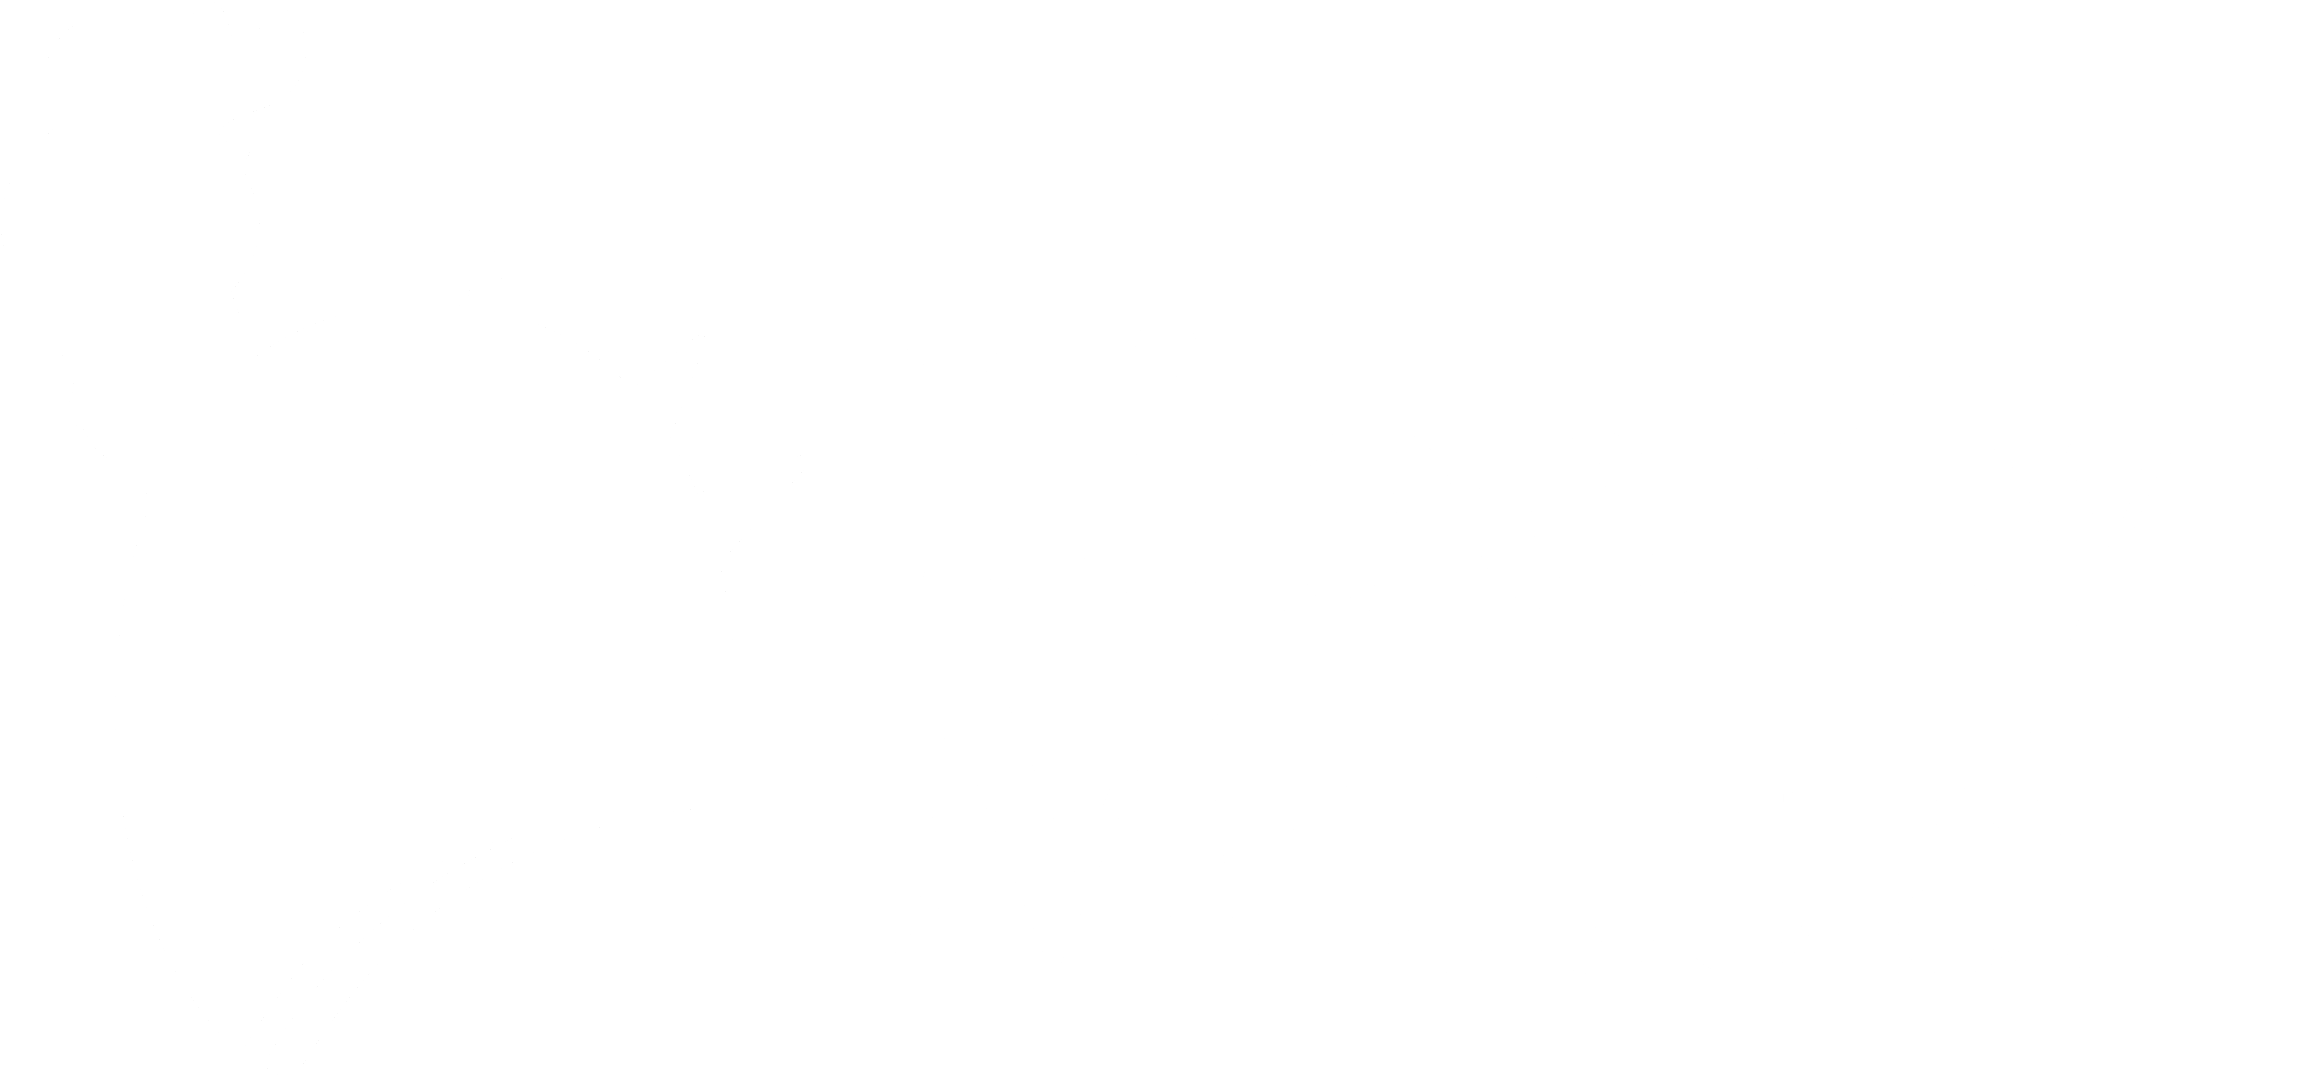 Transparent Liberty Mutual Logo Png - berührende worte liebe